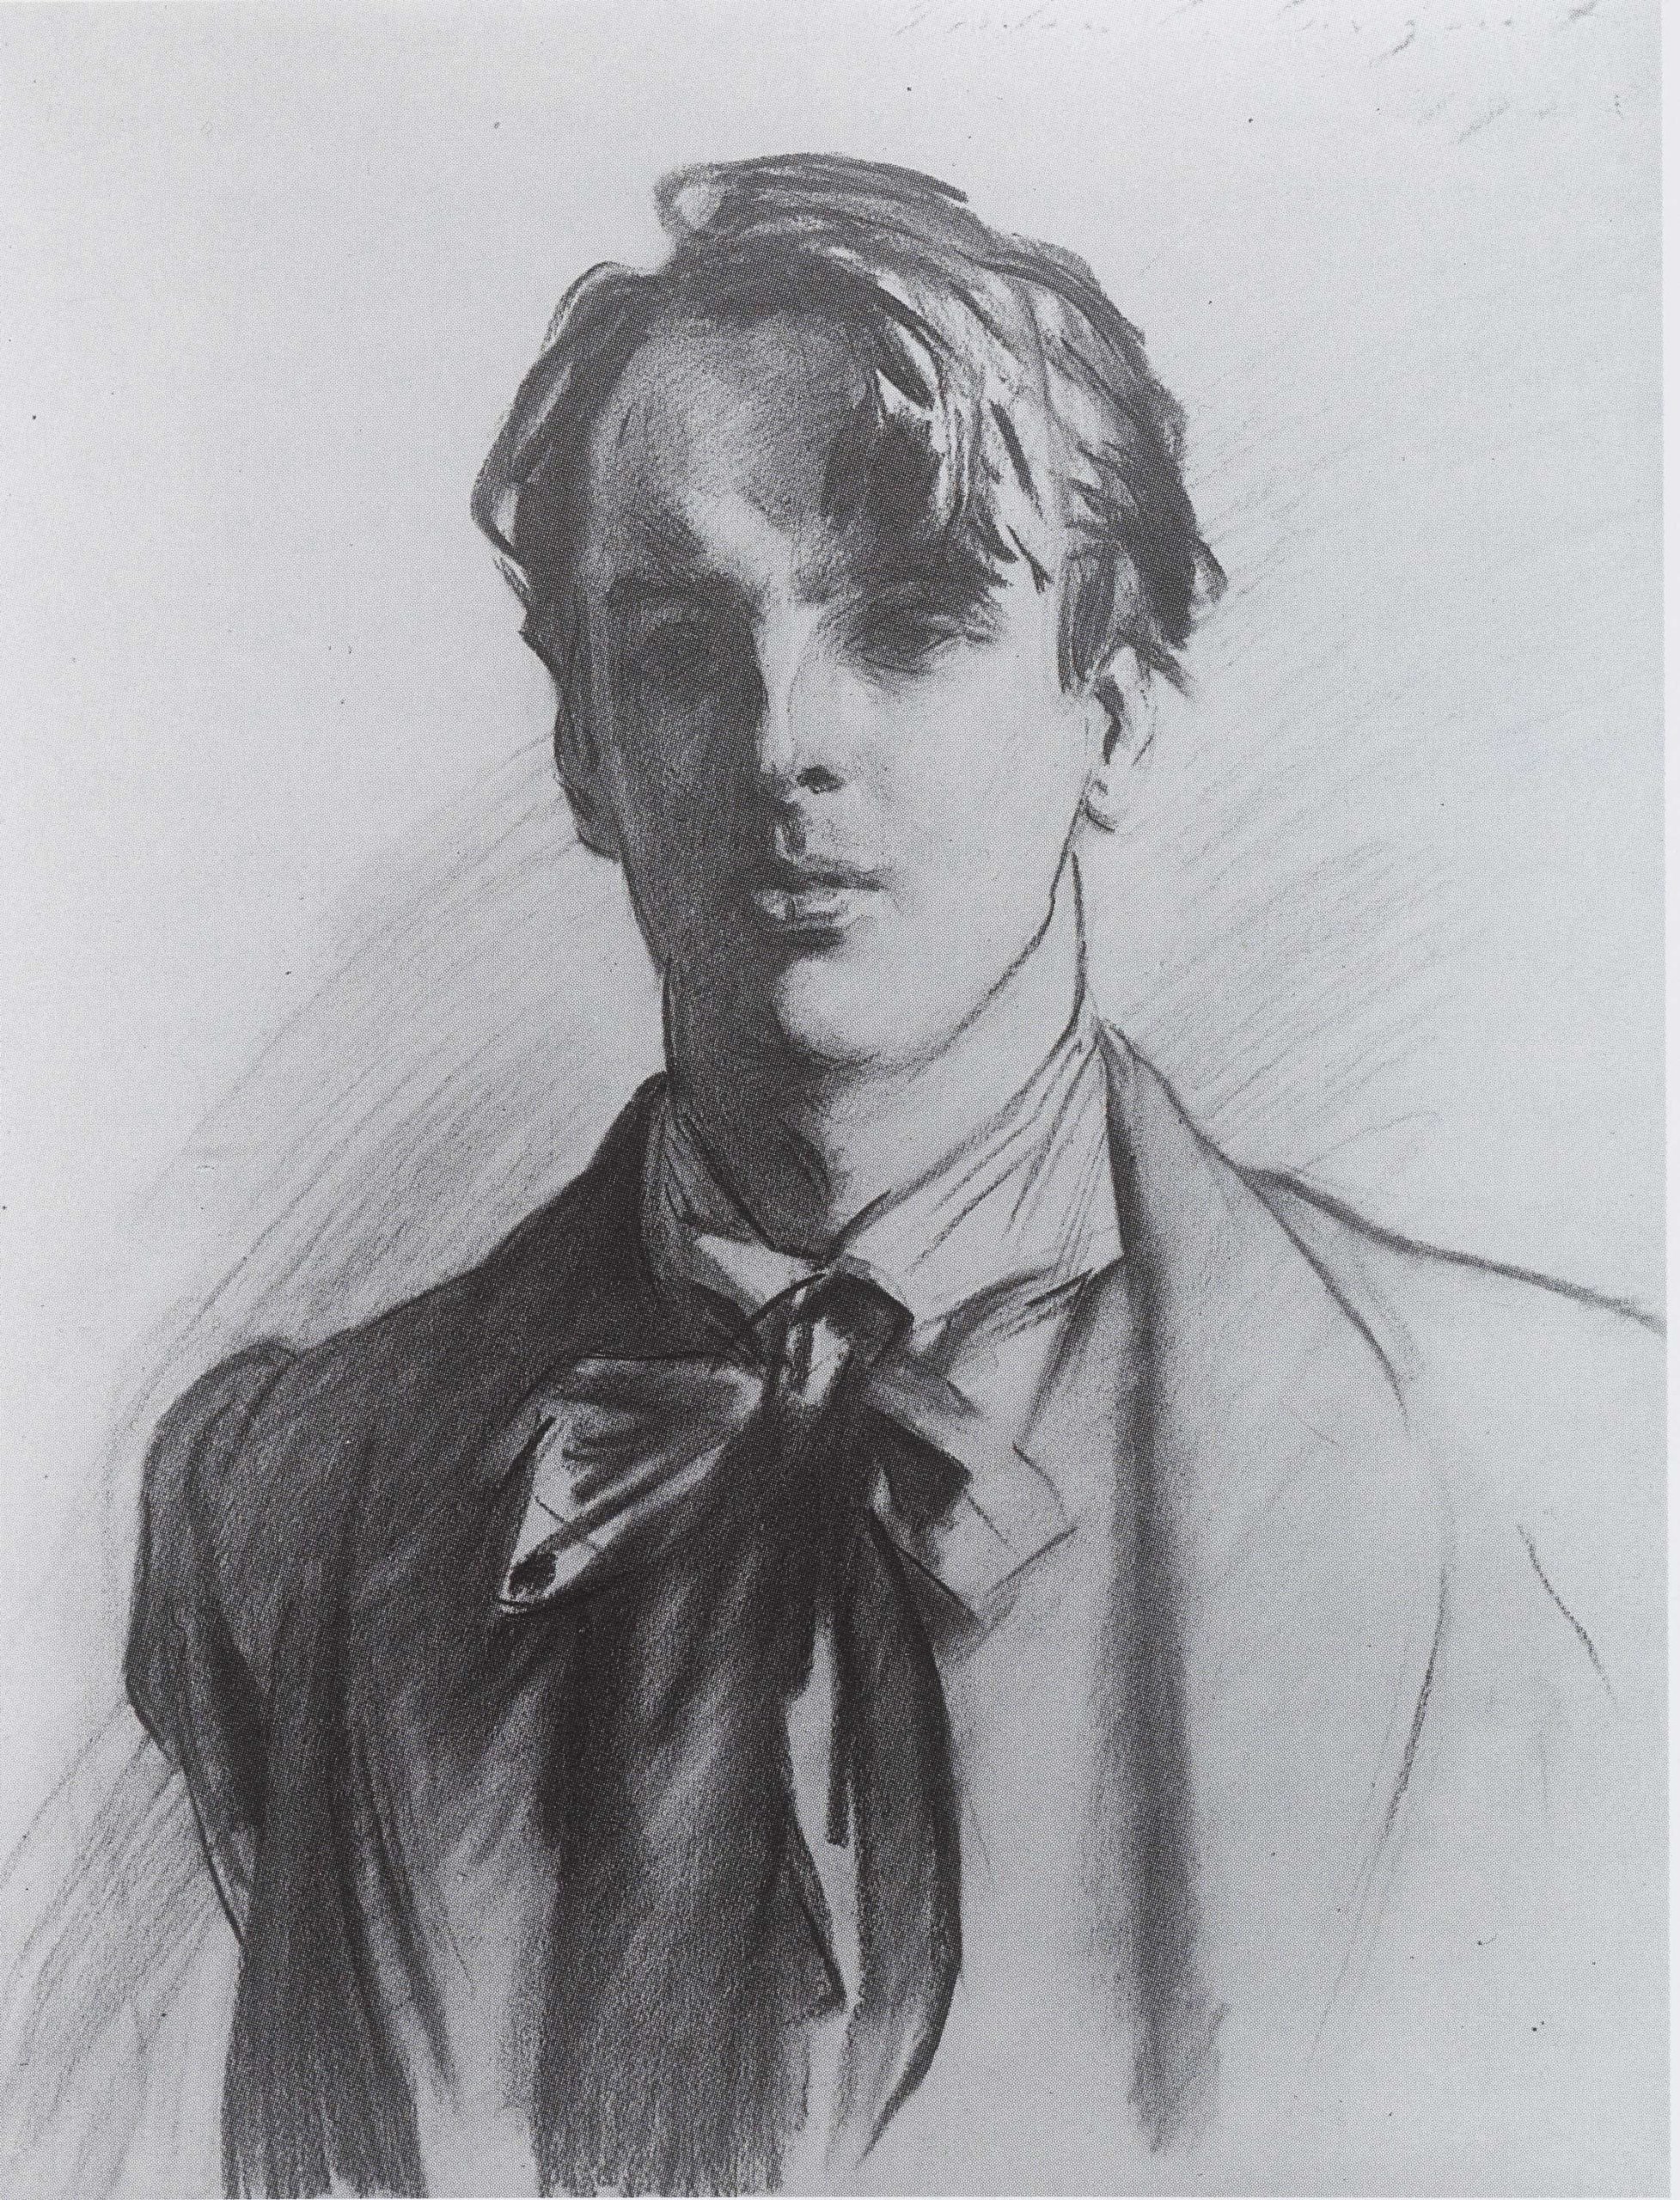 John Singer Sargent - portrait drawings